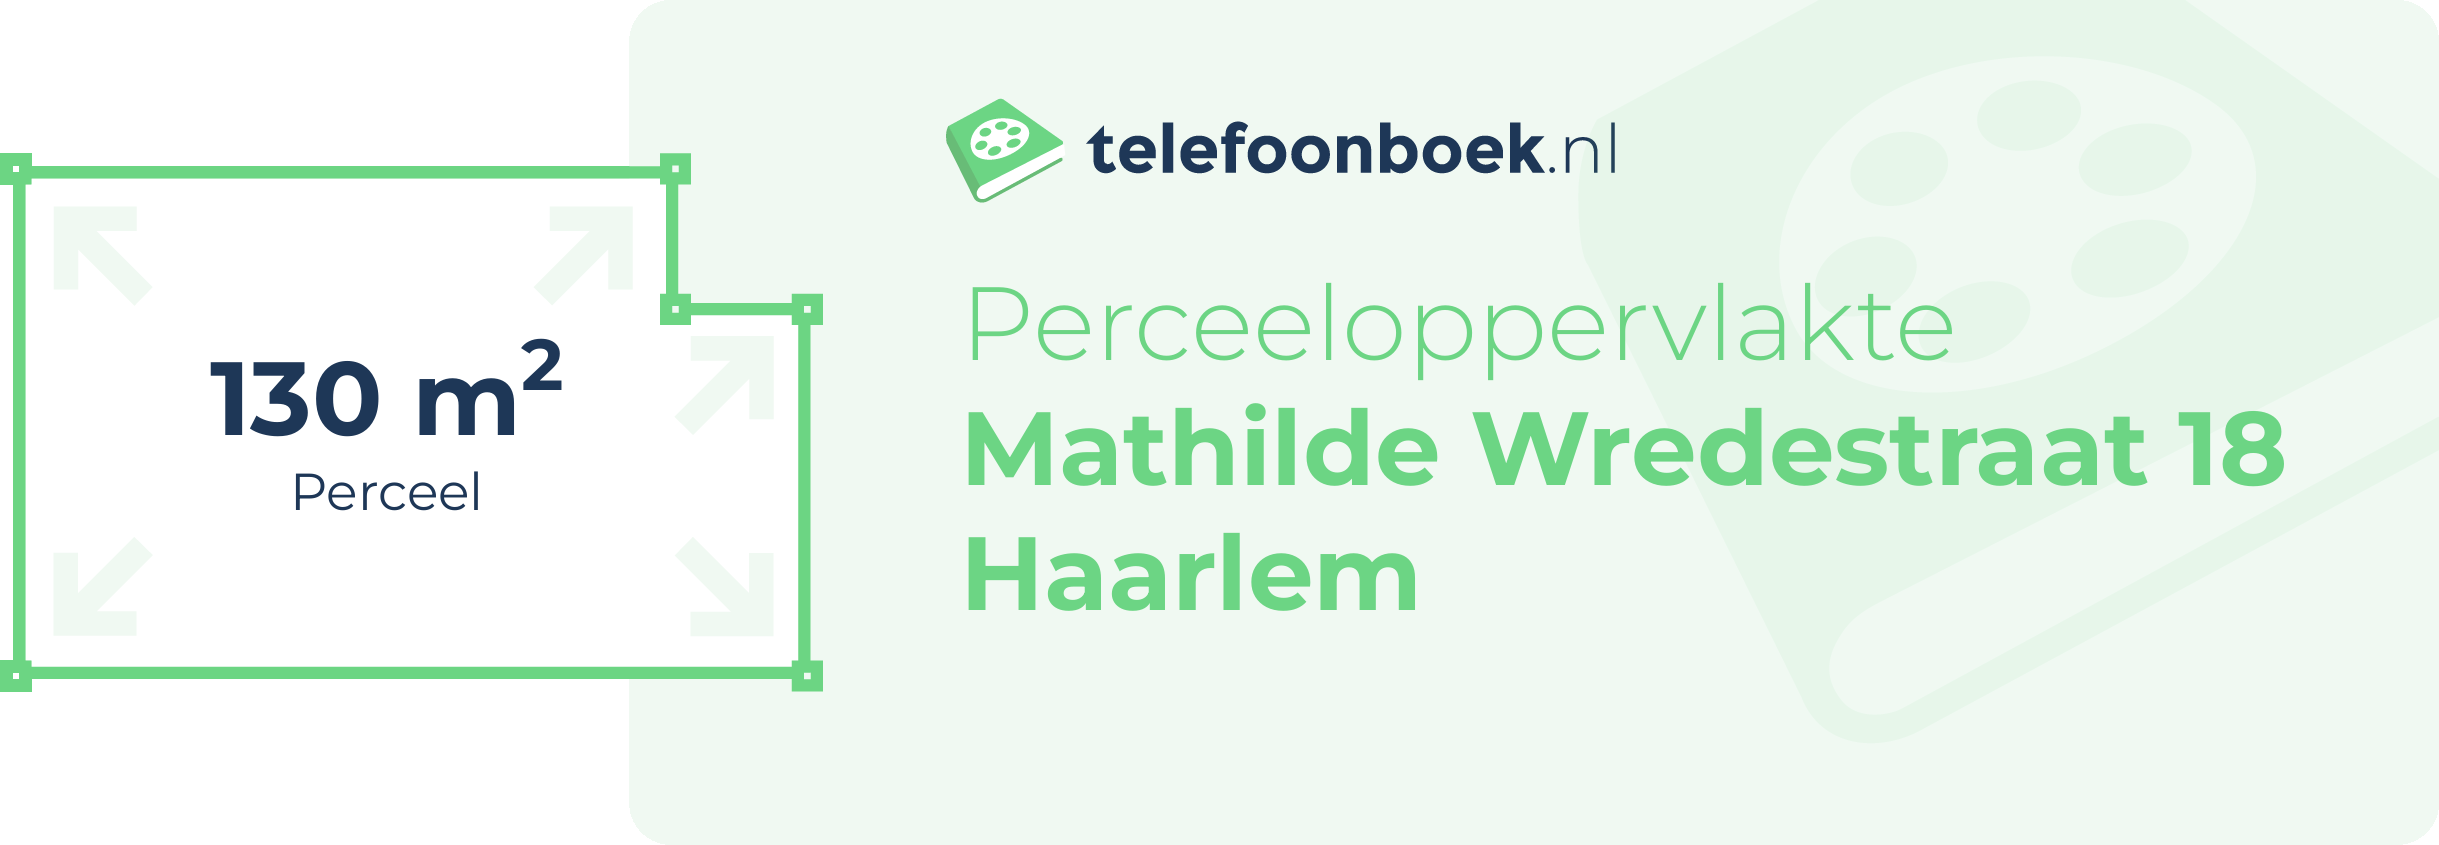 Perceeloppervlakte Mathilde Wredestraat 18 Haarlem